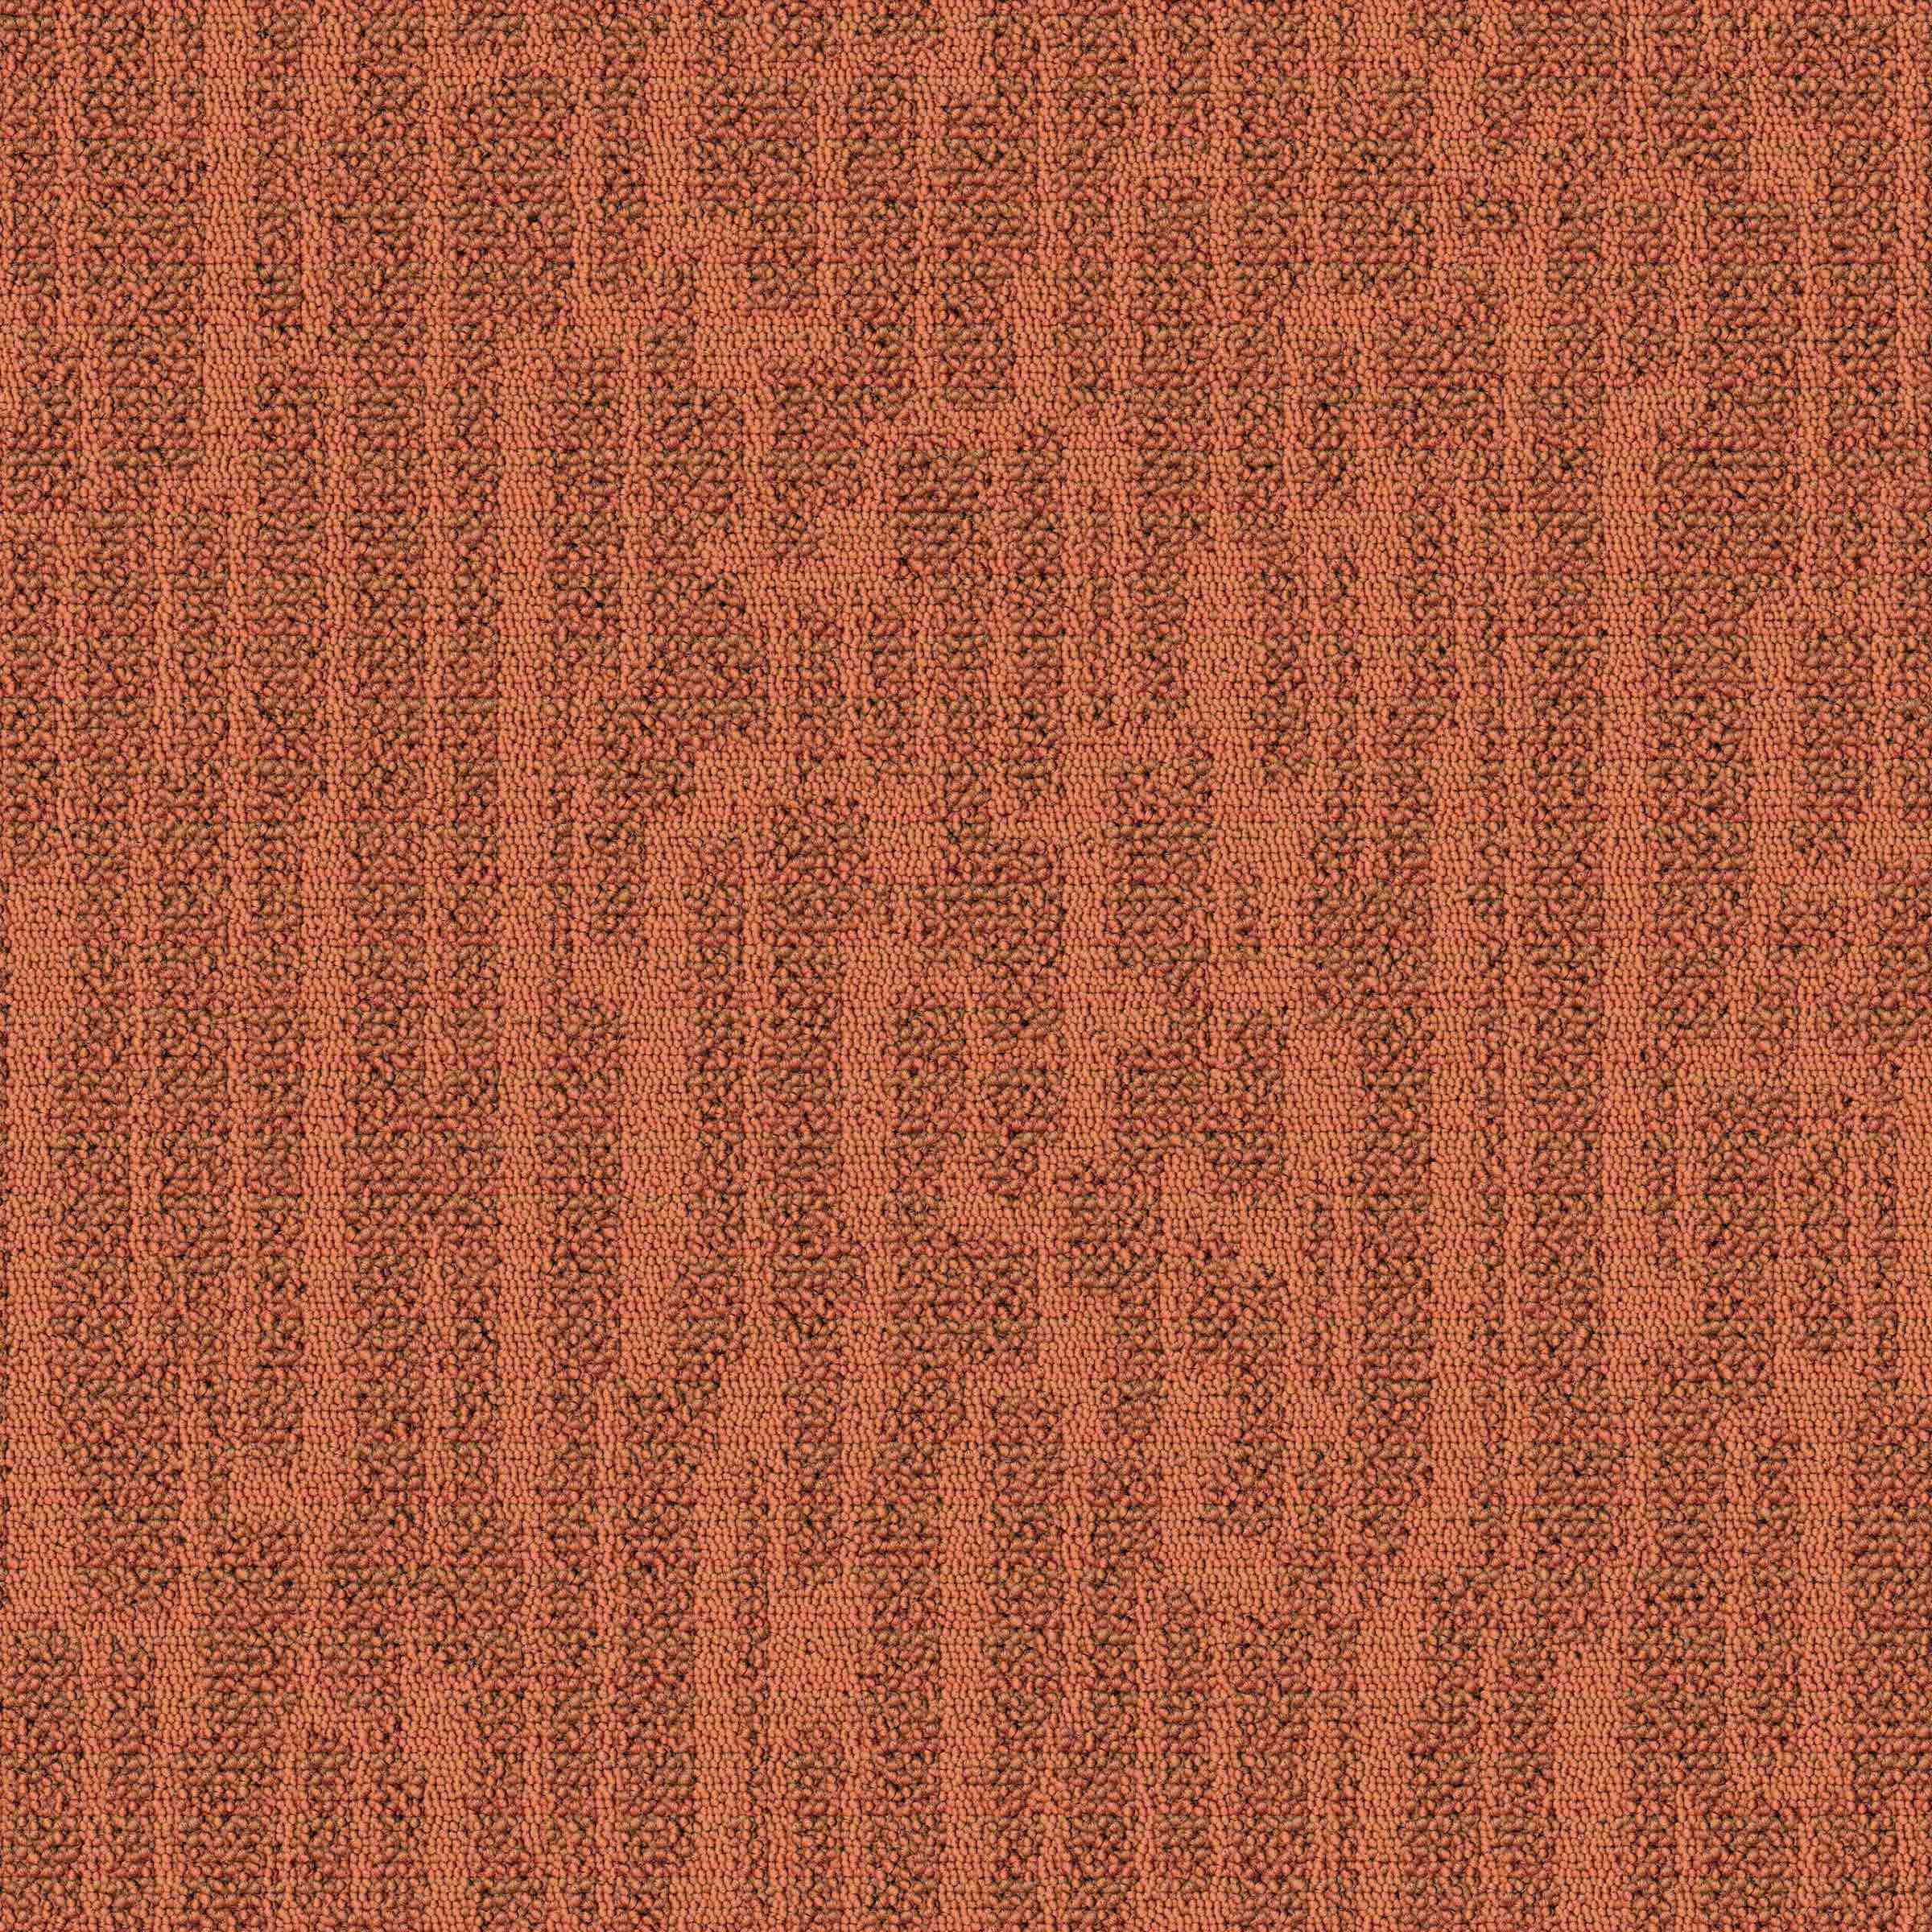 Greda | Moccasin | Paragon Carpet Tiles | Commercial Carpet Tiles